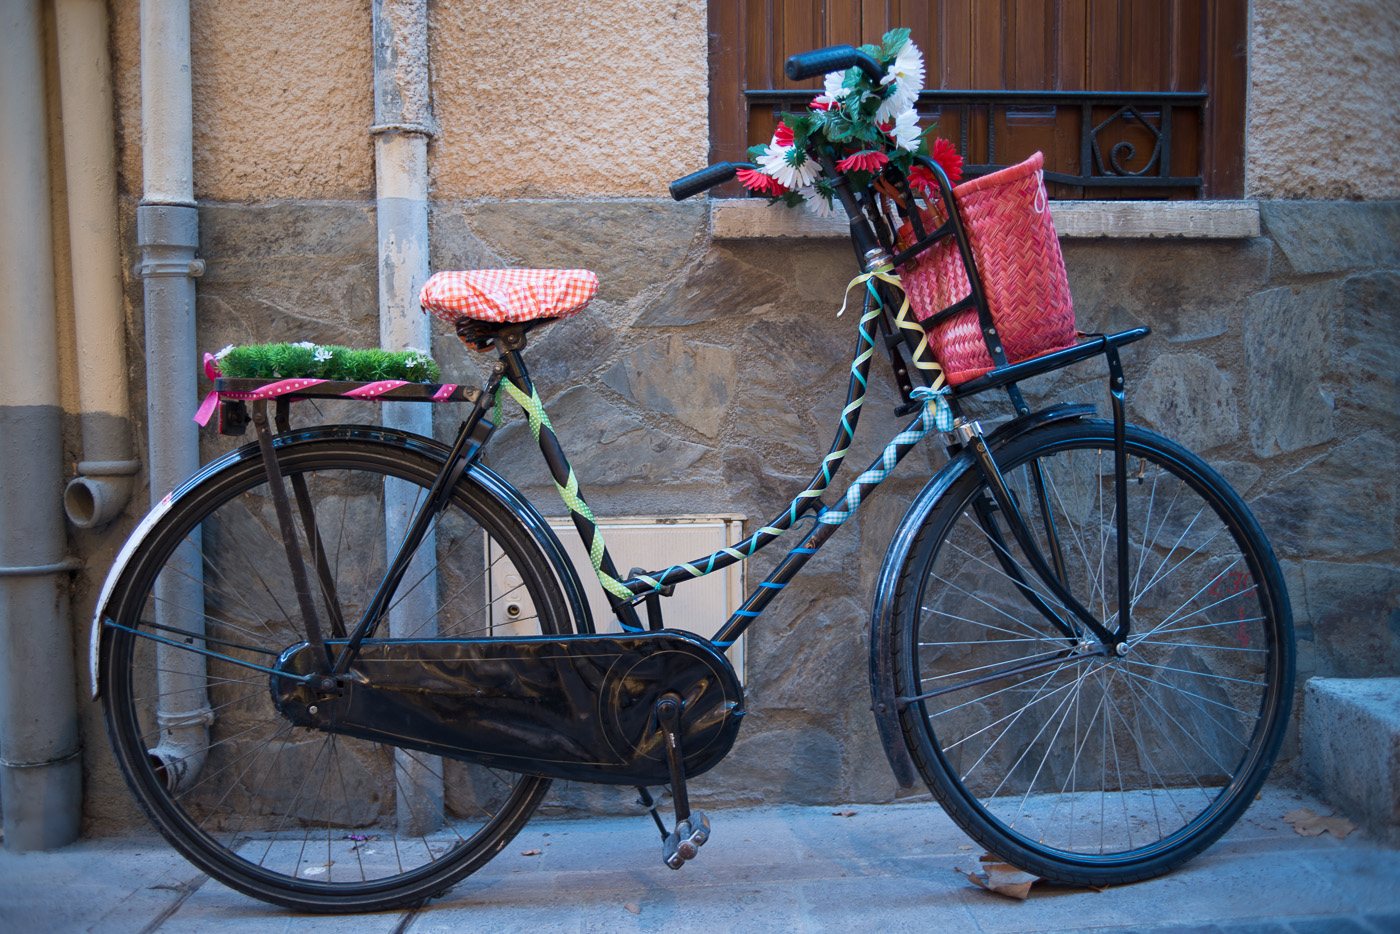 Colourful bike in Collioure - Nikon D800e & Summicron-R 35:2